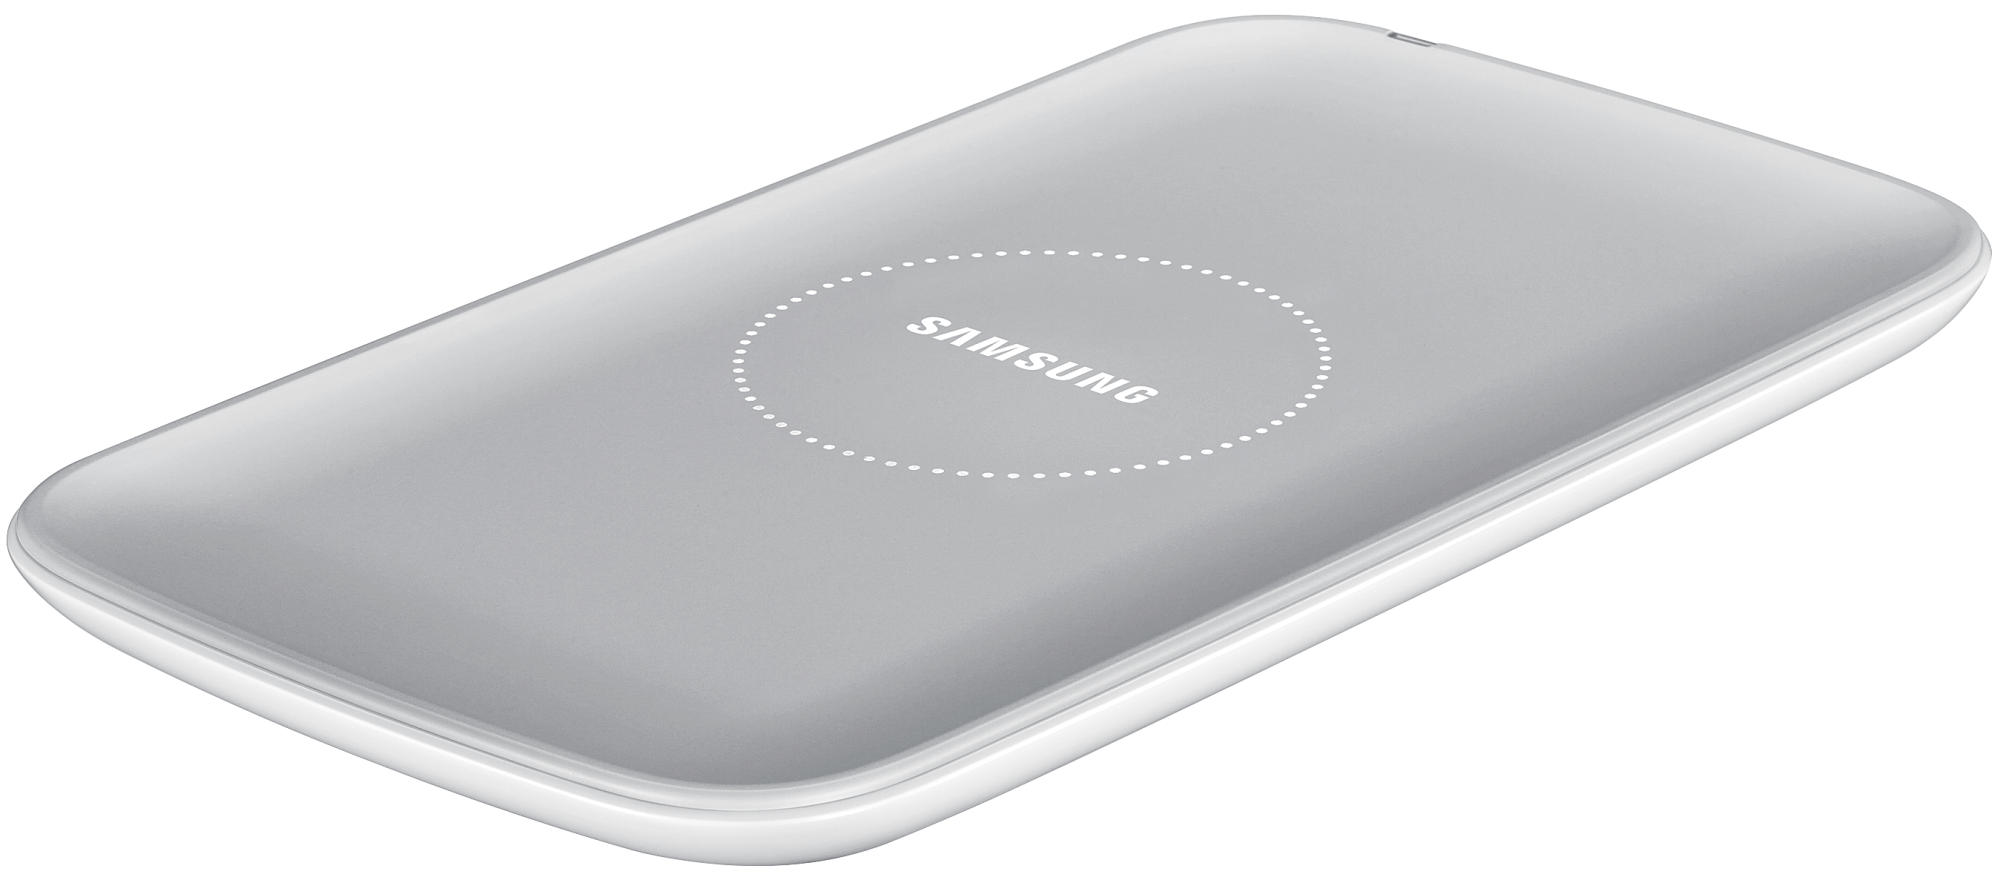 Weiß EP-WI950EWEGWW Samsung, Lade-Set SAMSUNG